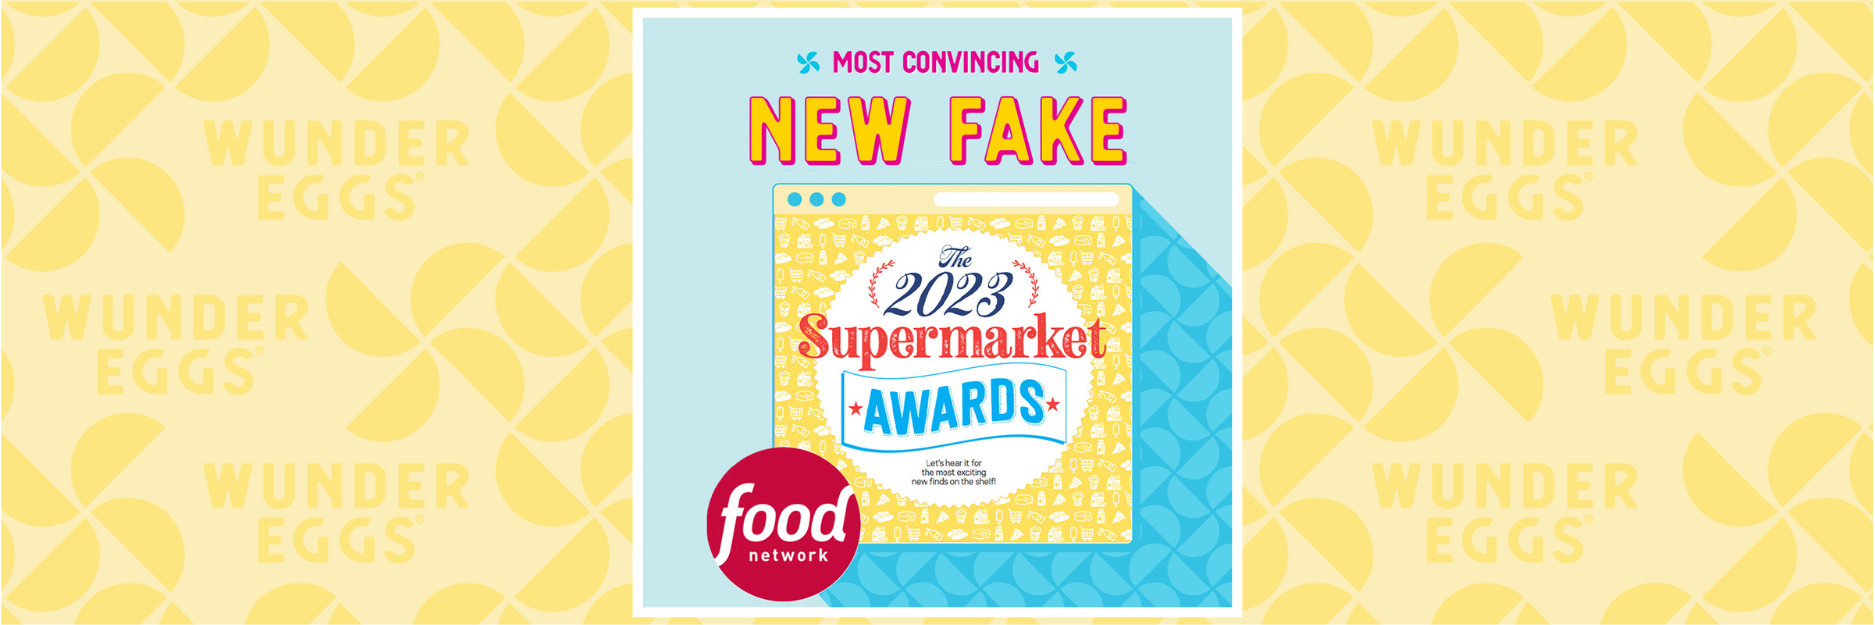 WunderEggs Wins a "SuperMarket Award" by Food Network Magazine